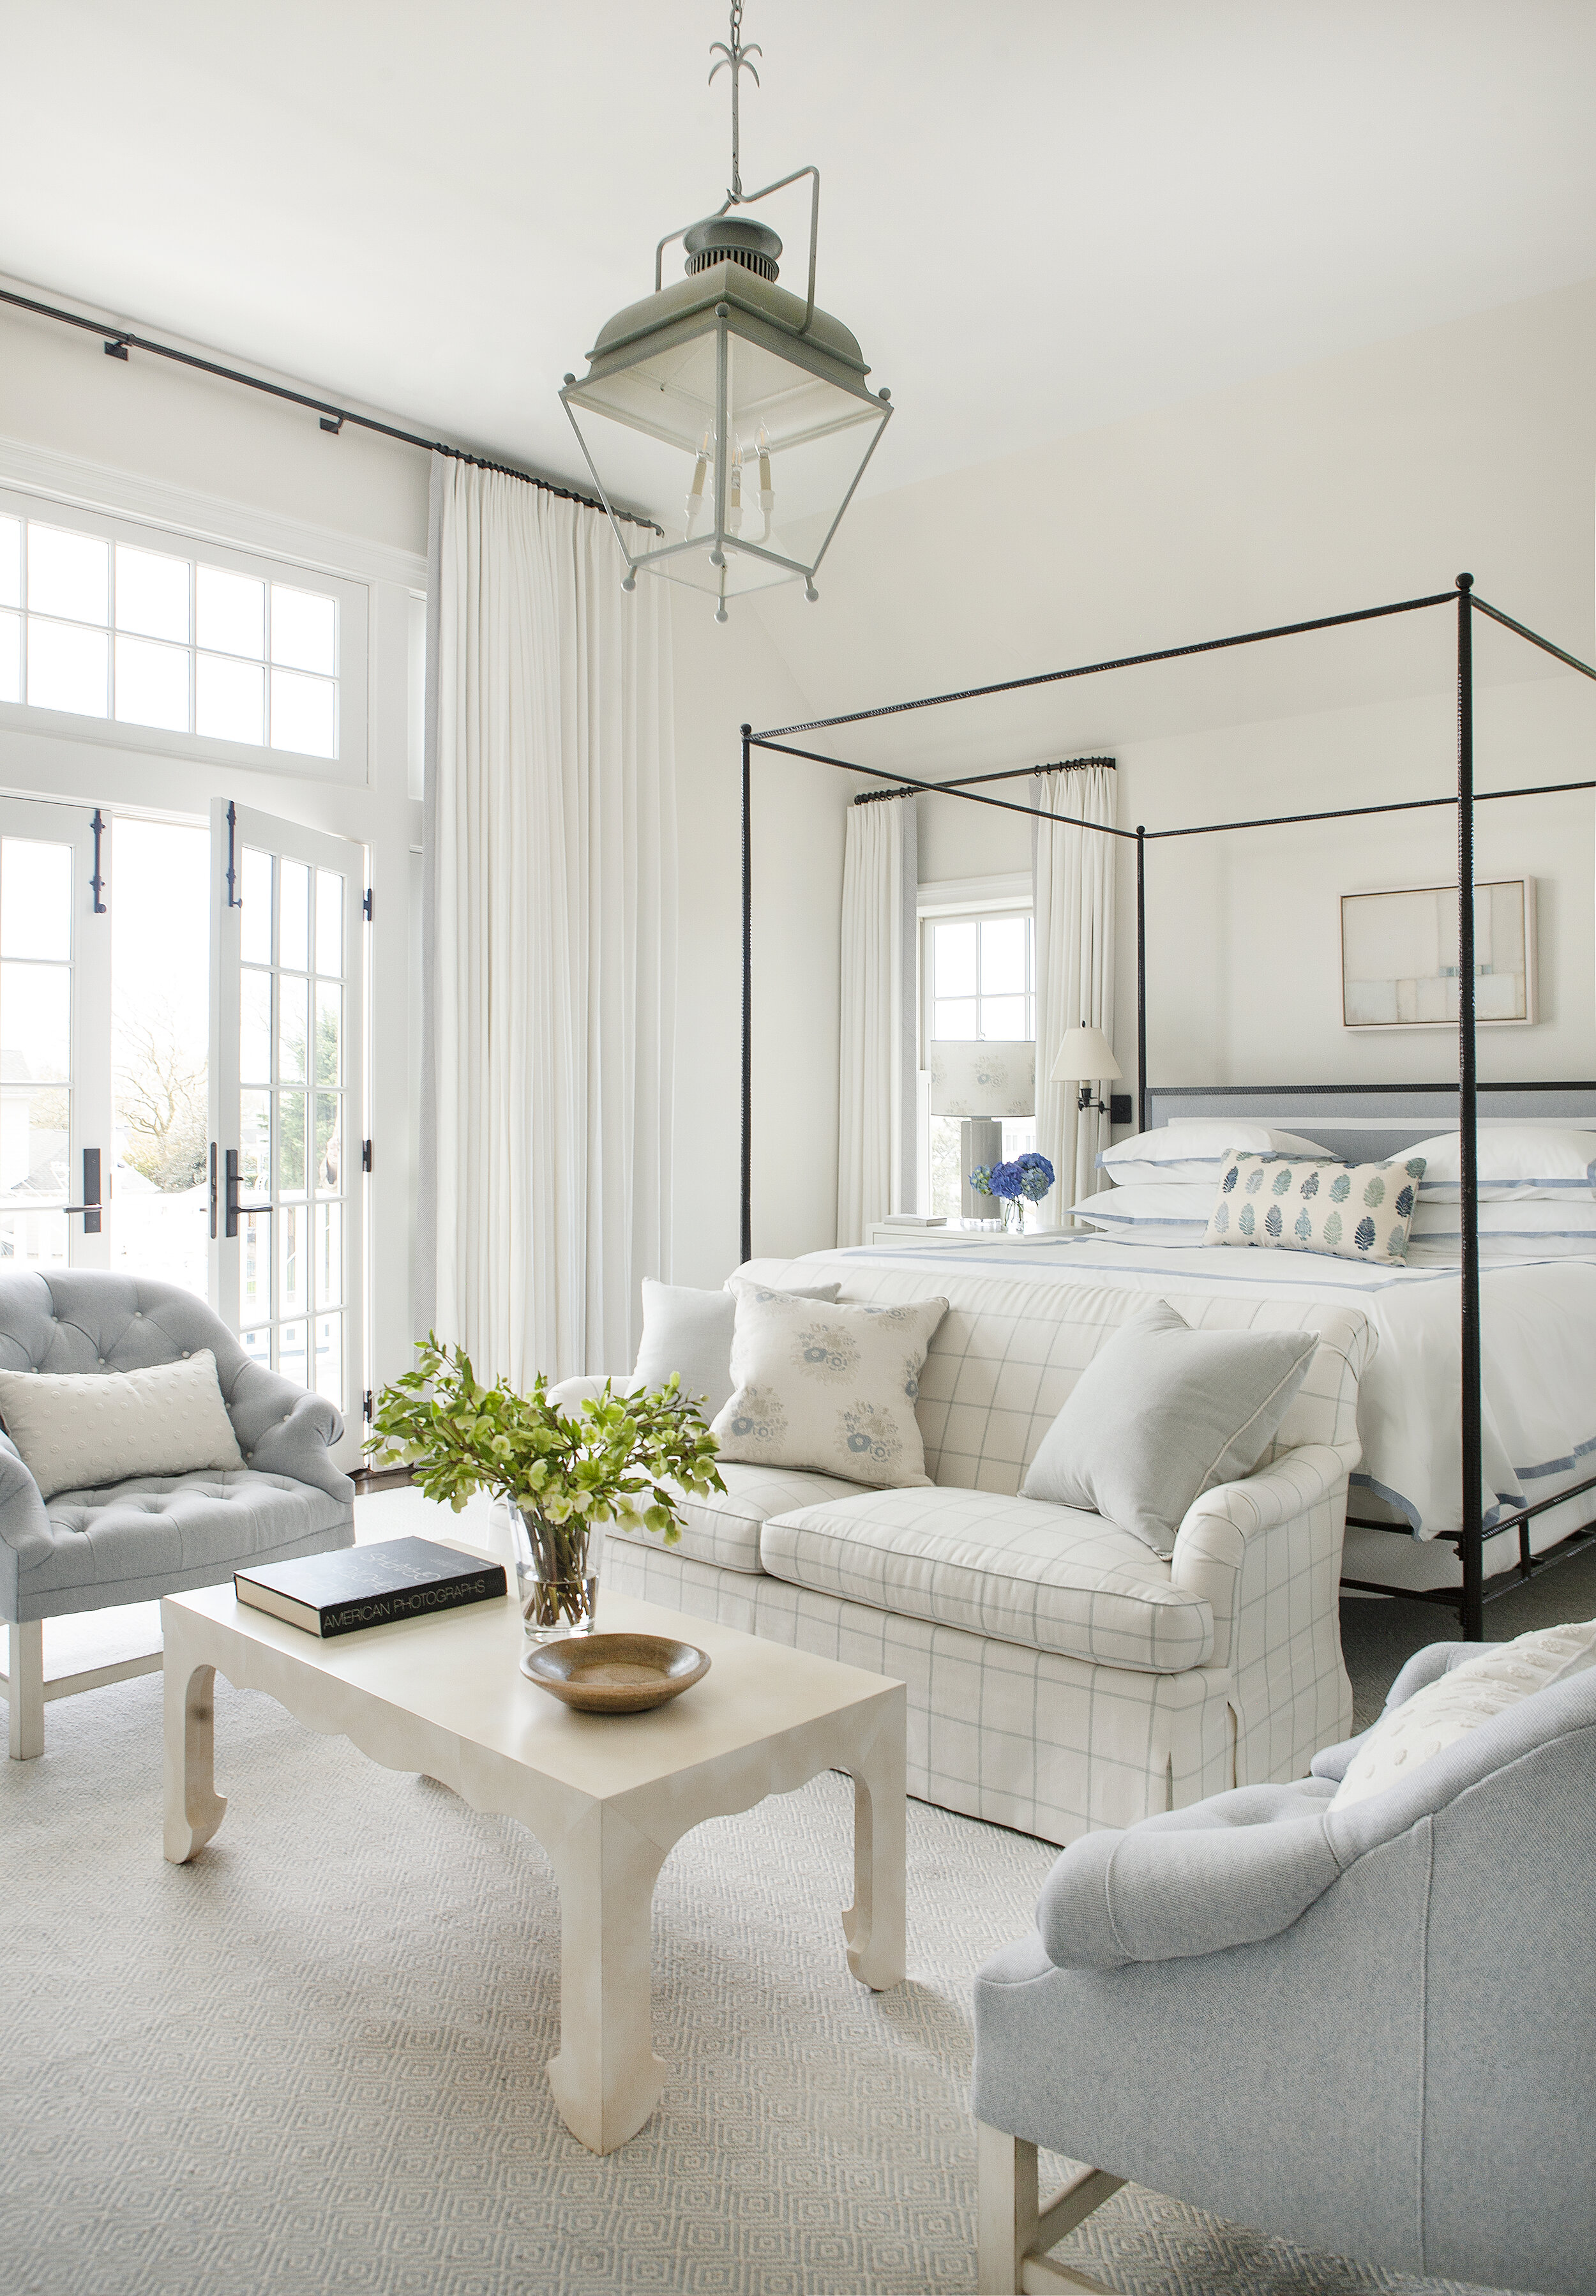 clean-white-bright-bedroom-interior-sitting-area.jpeg